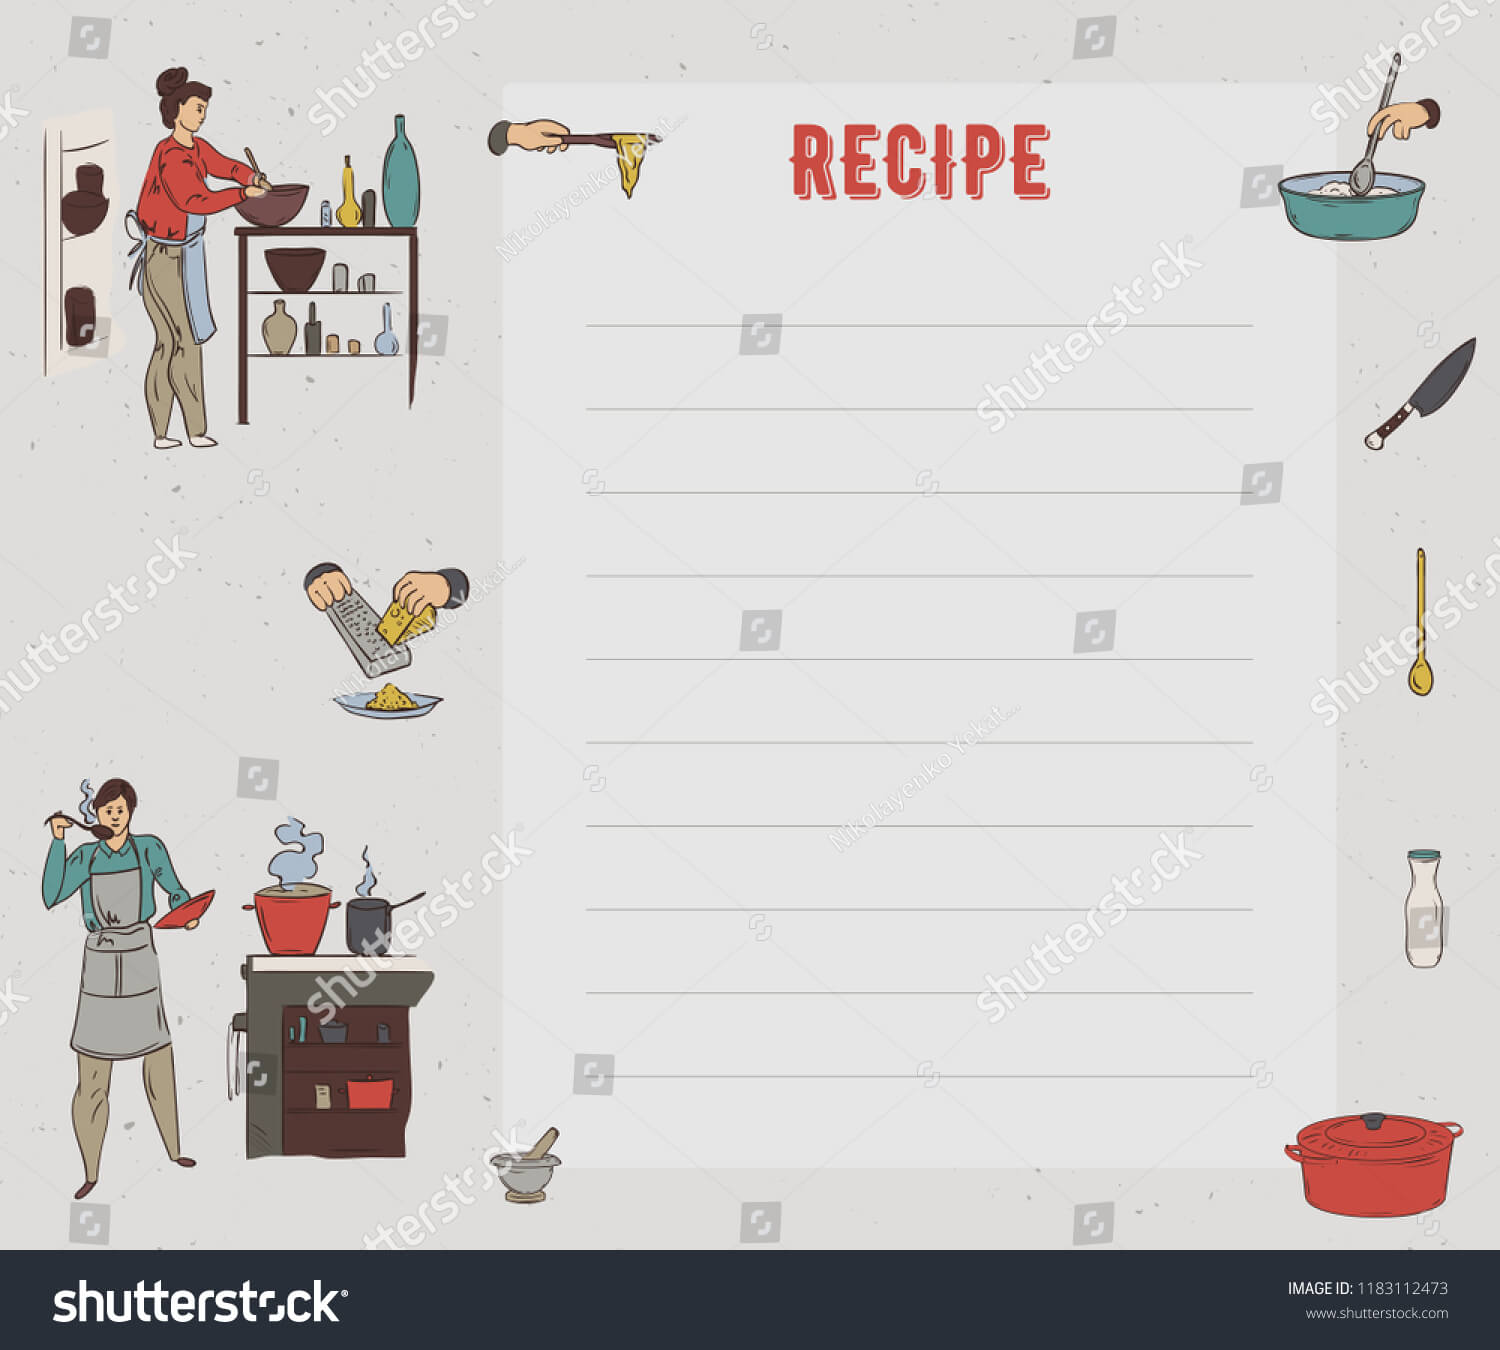 Recipe Card Cookbook Page Design Template Stock Image Throughout Restaurant Recipe Card Template